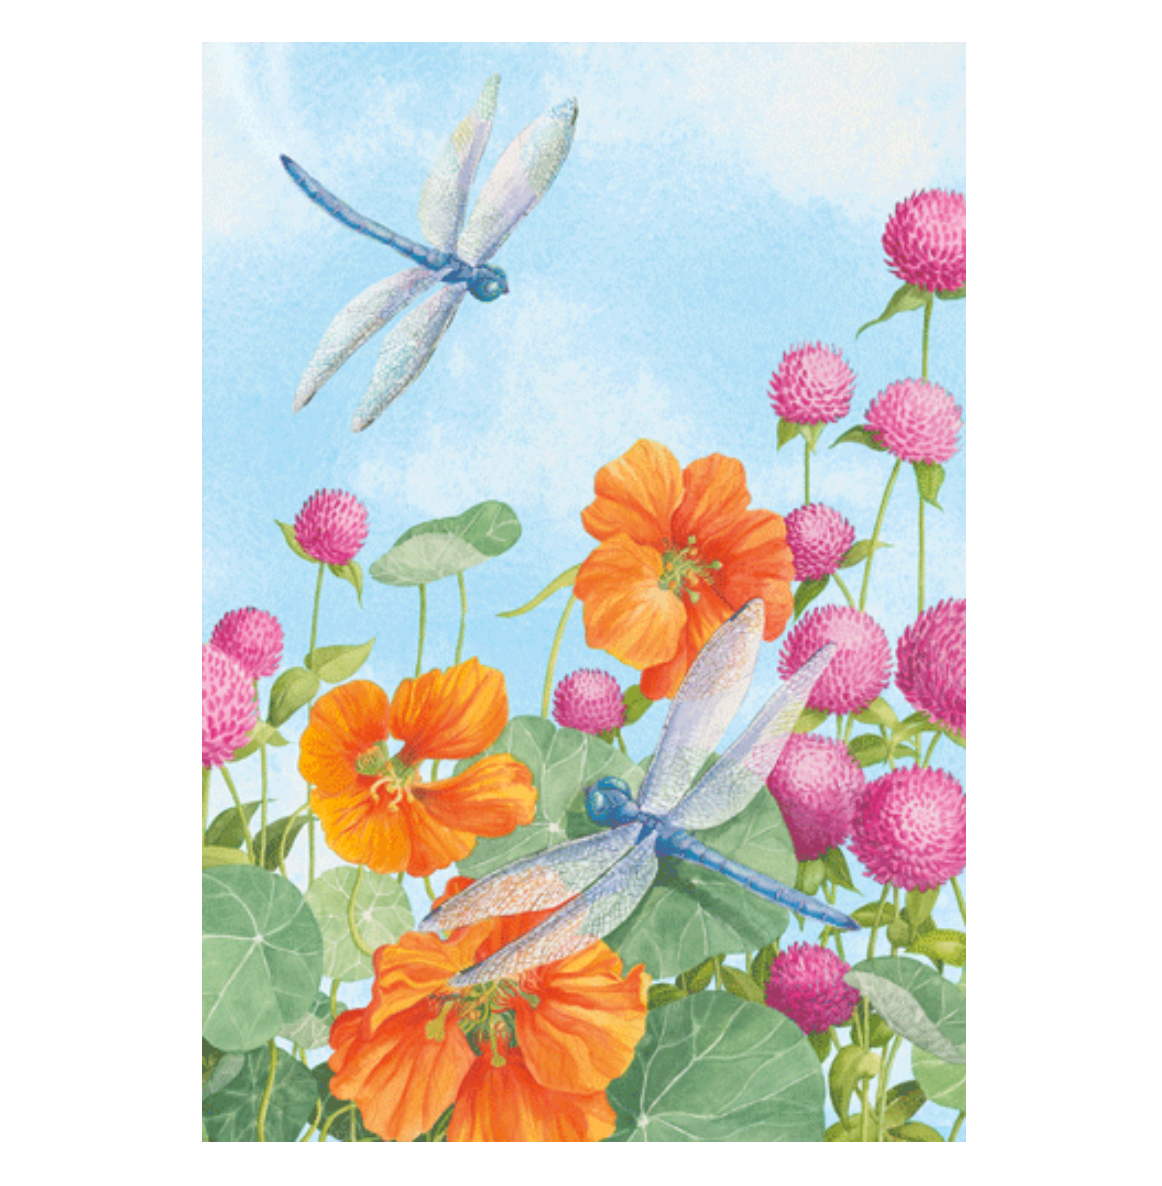 Caspari Dragonflies And Flowers – Blank Inside Card – 1 Card & 1 Envelope